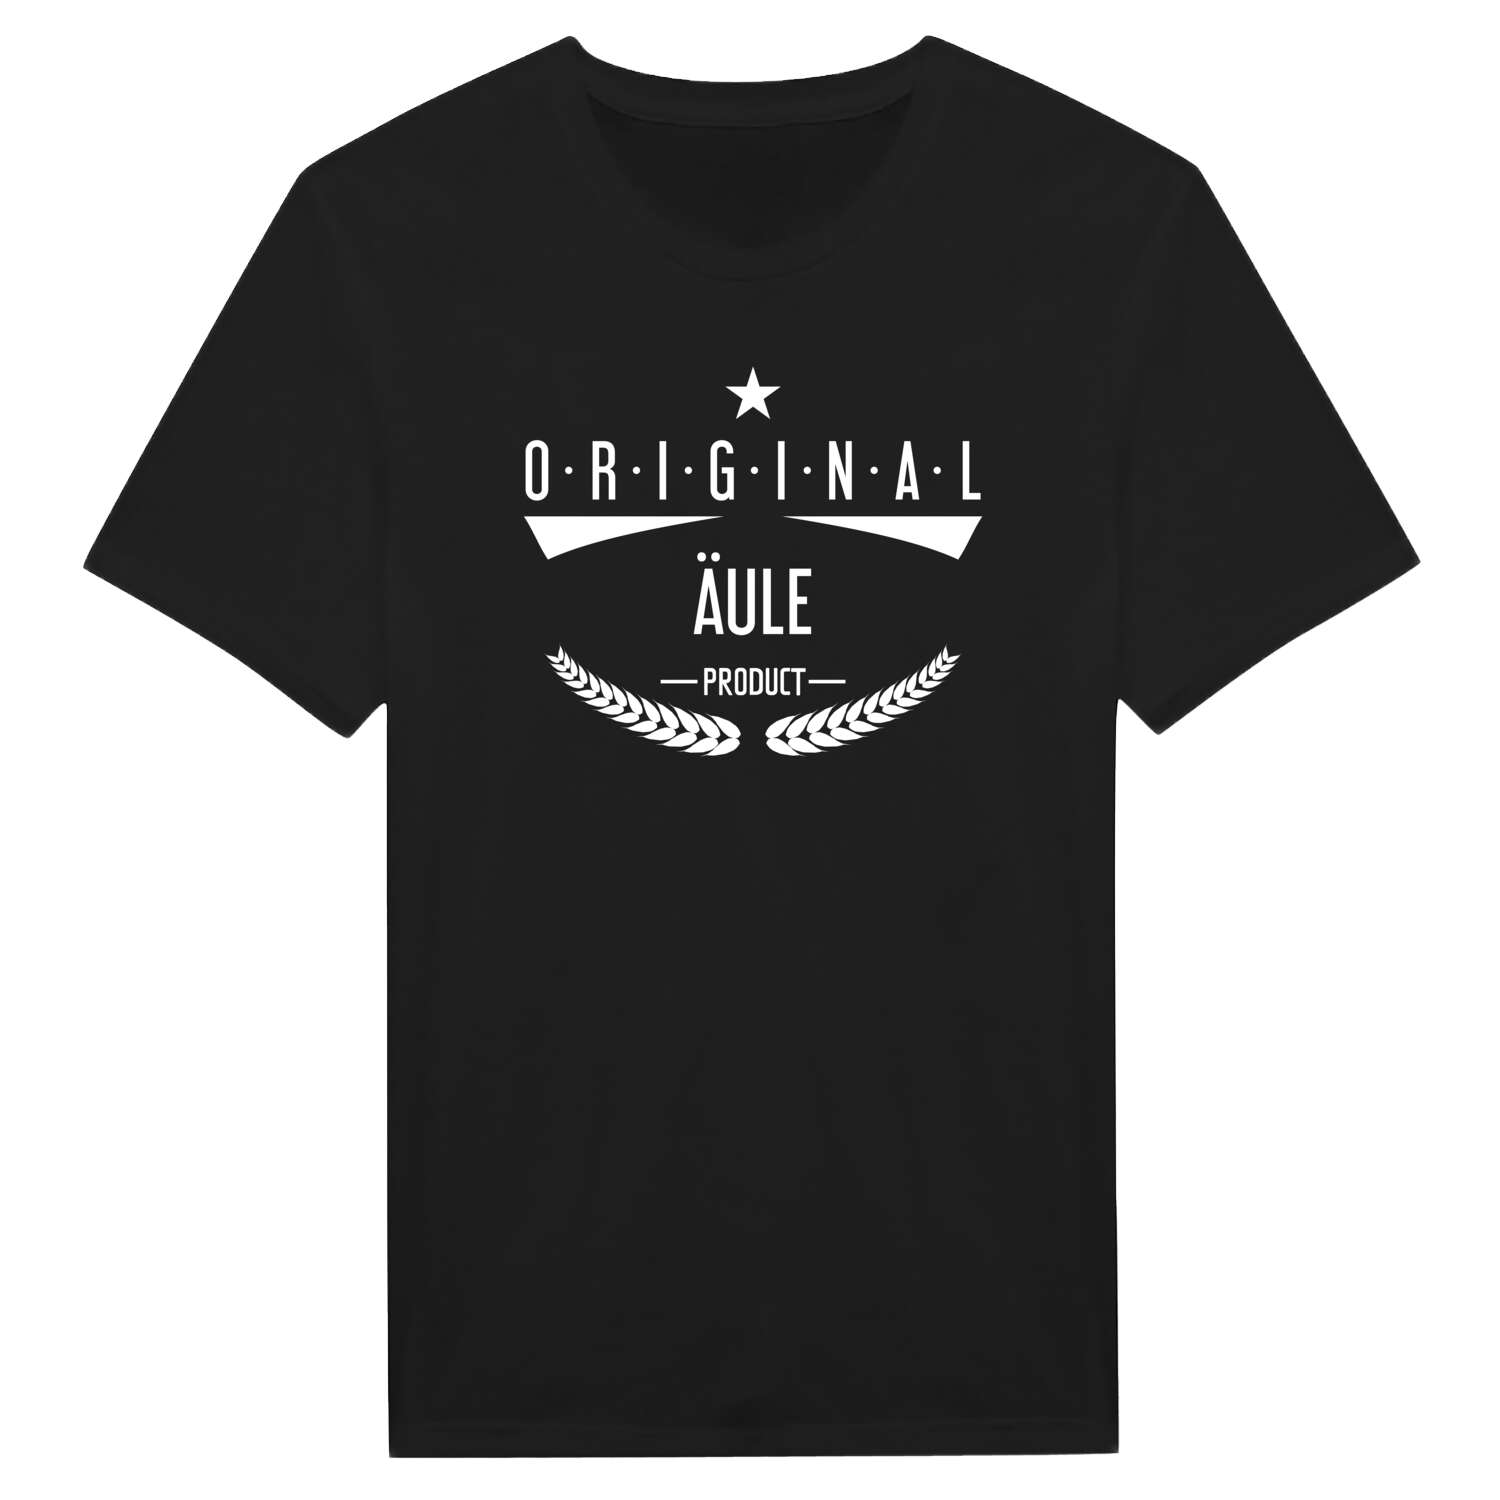 Äule T-Shirt »Original Product«